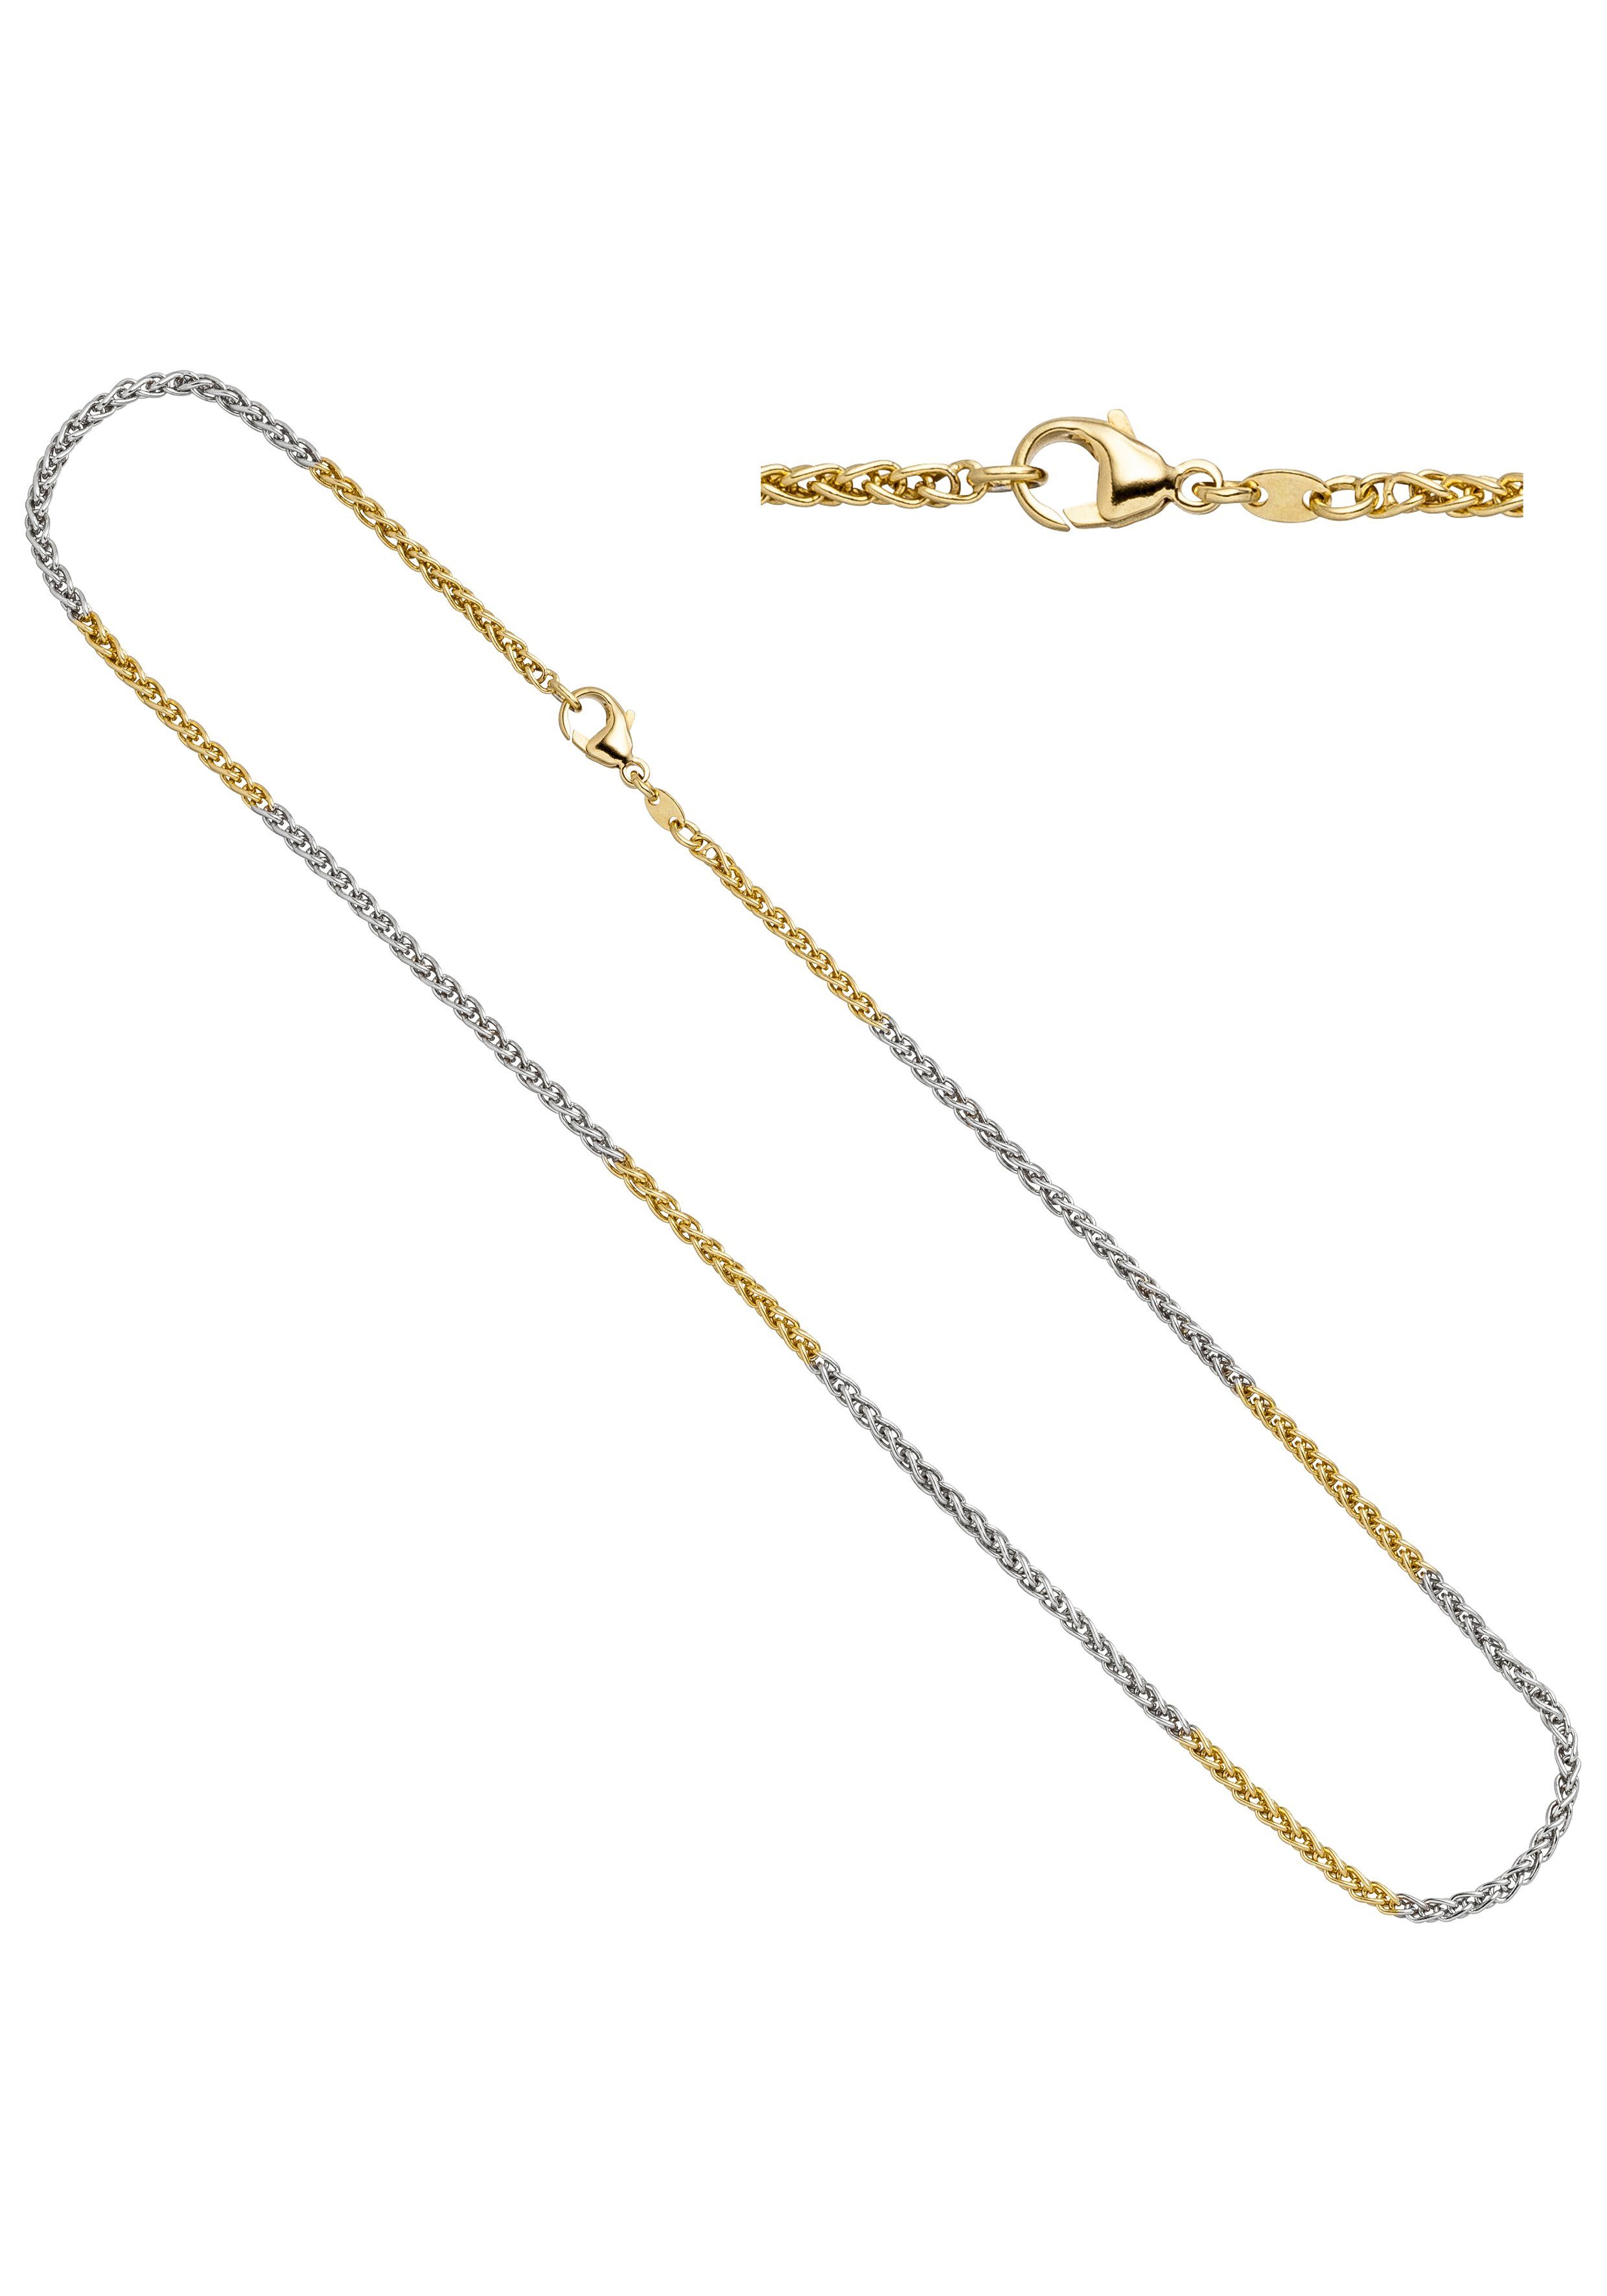 JOBO Goldkette, Zopfkette 585 Gold bicolor 42 cm 2,2 mm online kaufen